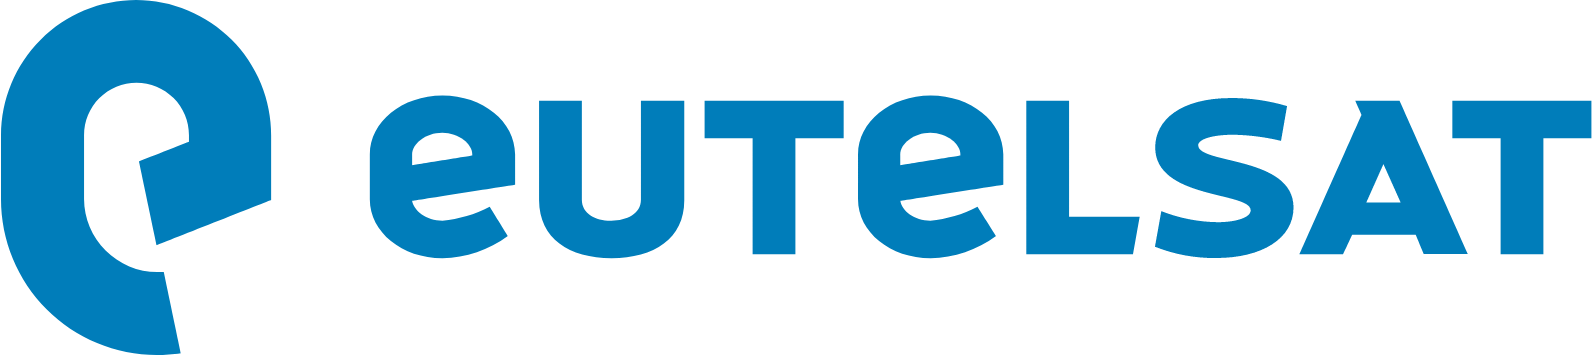 Eutelsat logo large (transparent PNG)